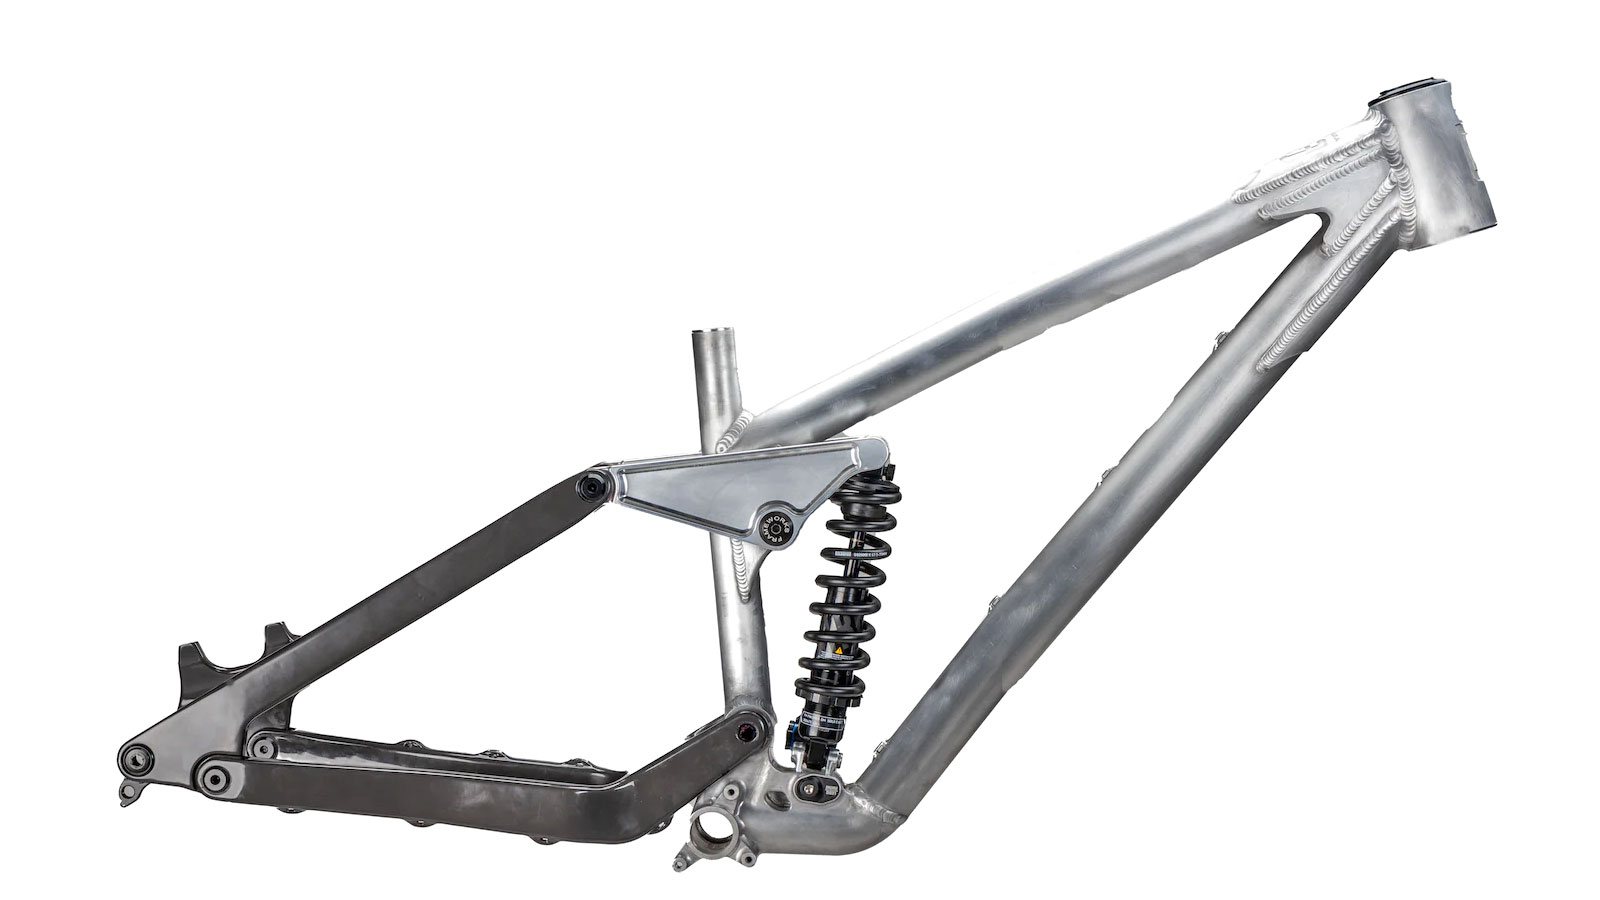 Frameworks DH bike frame, pre-order aluminum & carbon downhill bike project of Neko Mulally, frameset with shock